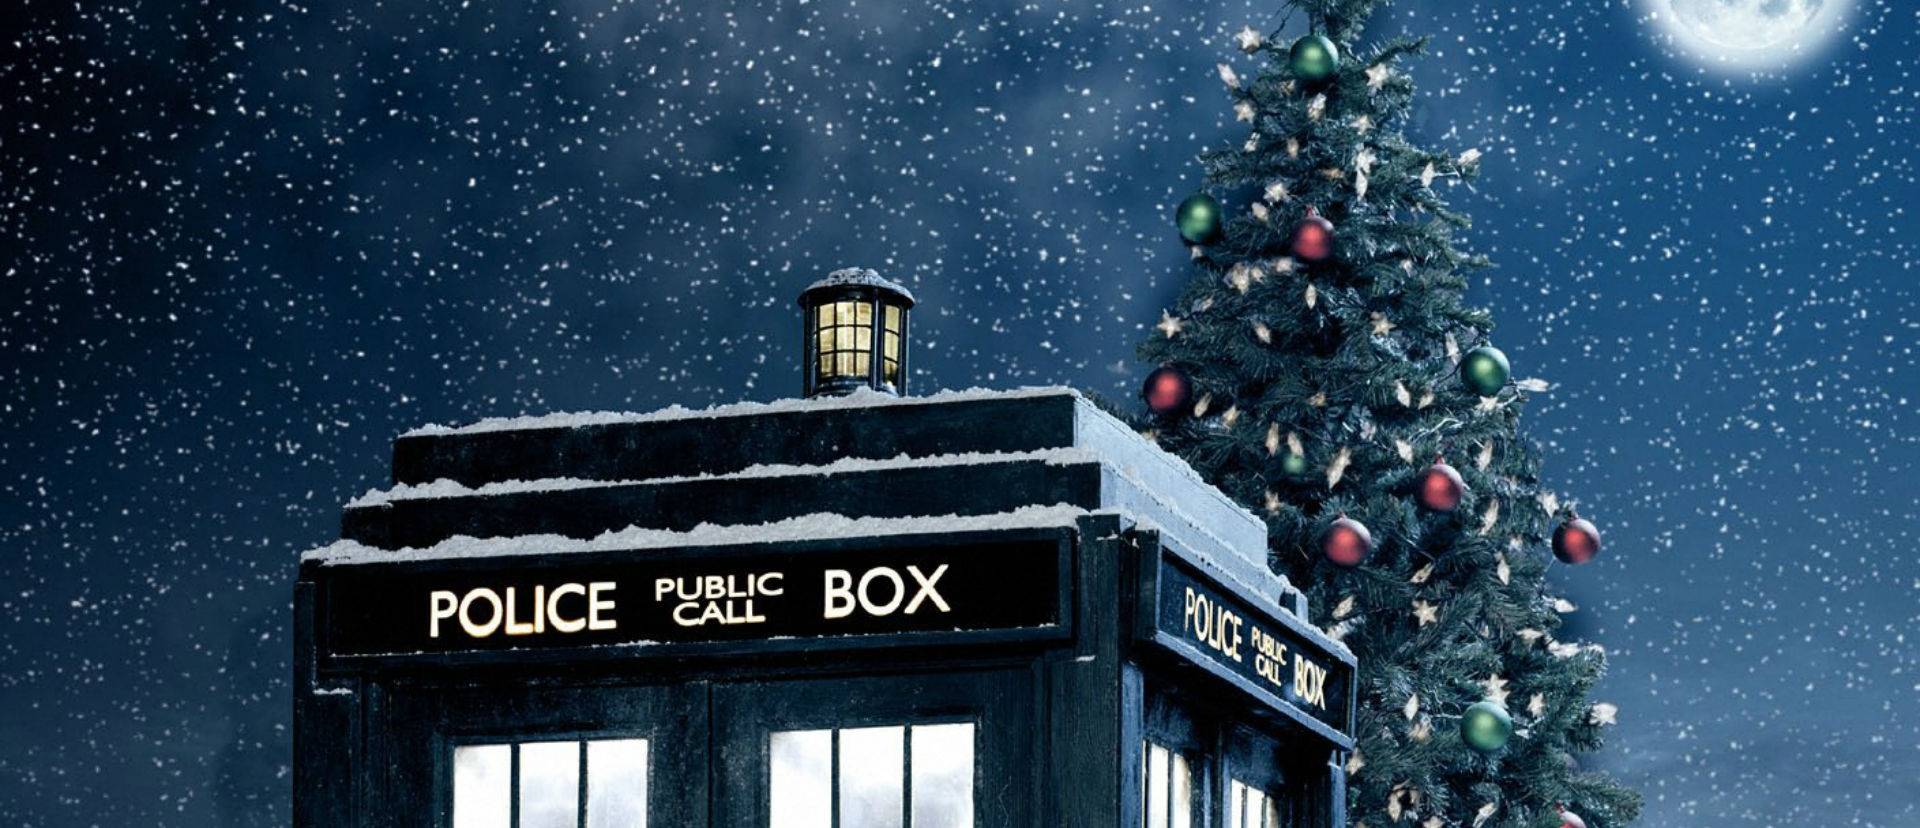 Dr Who idei karácsonya